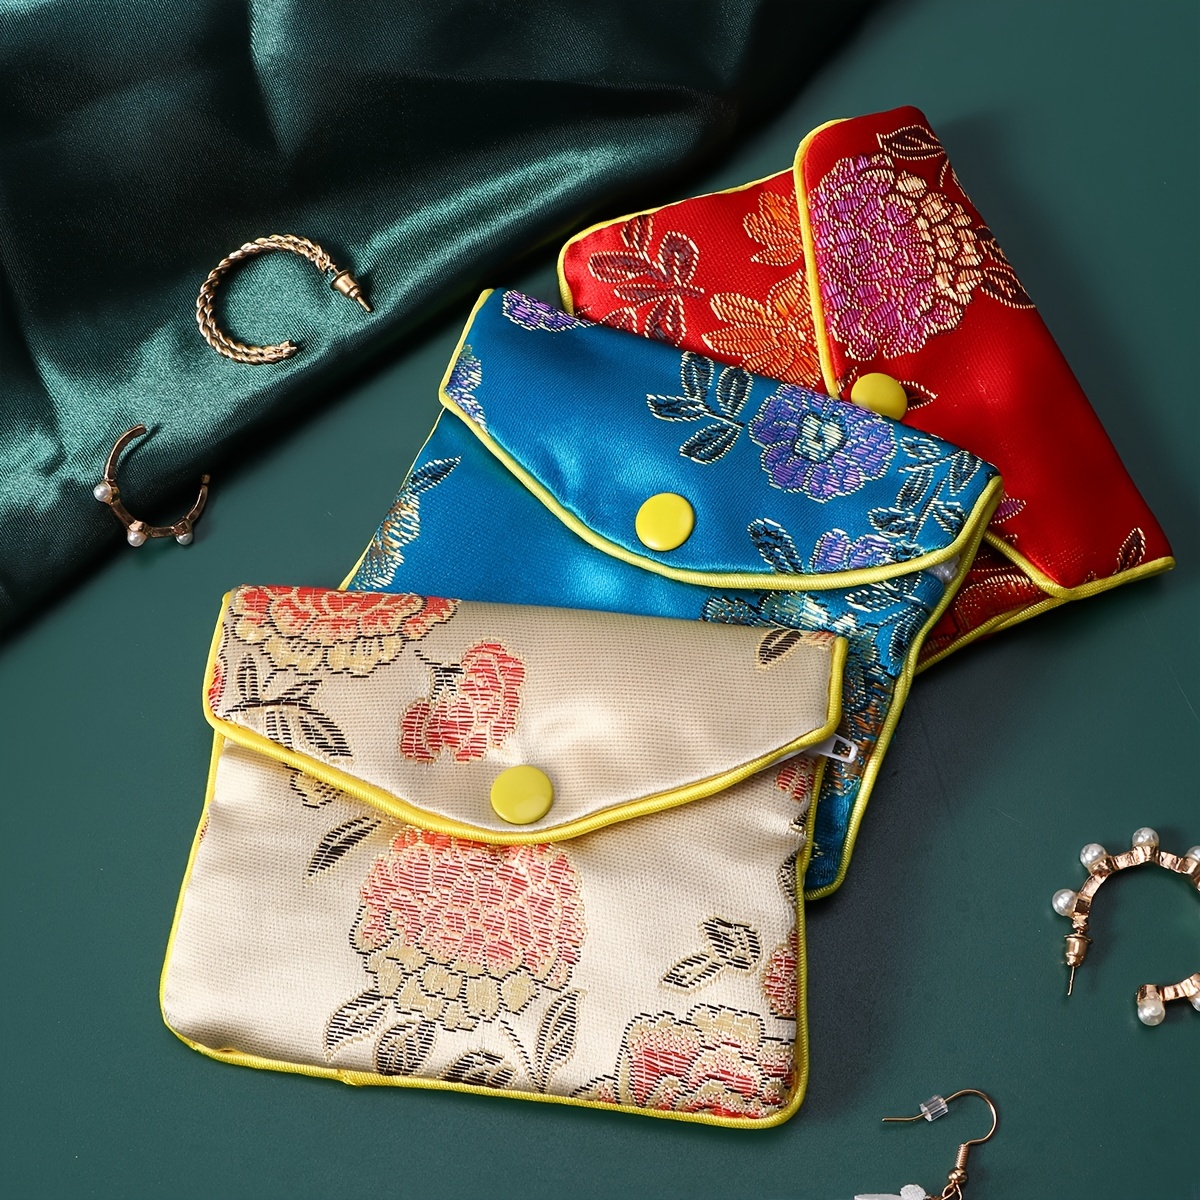 Purses Snap Bags Storage Bags Velvet Bags Delicate Jewelry Bags